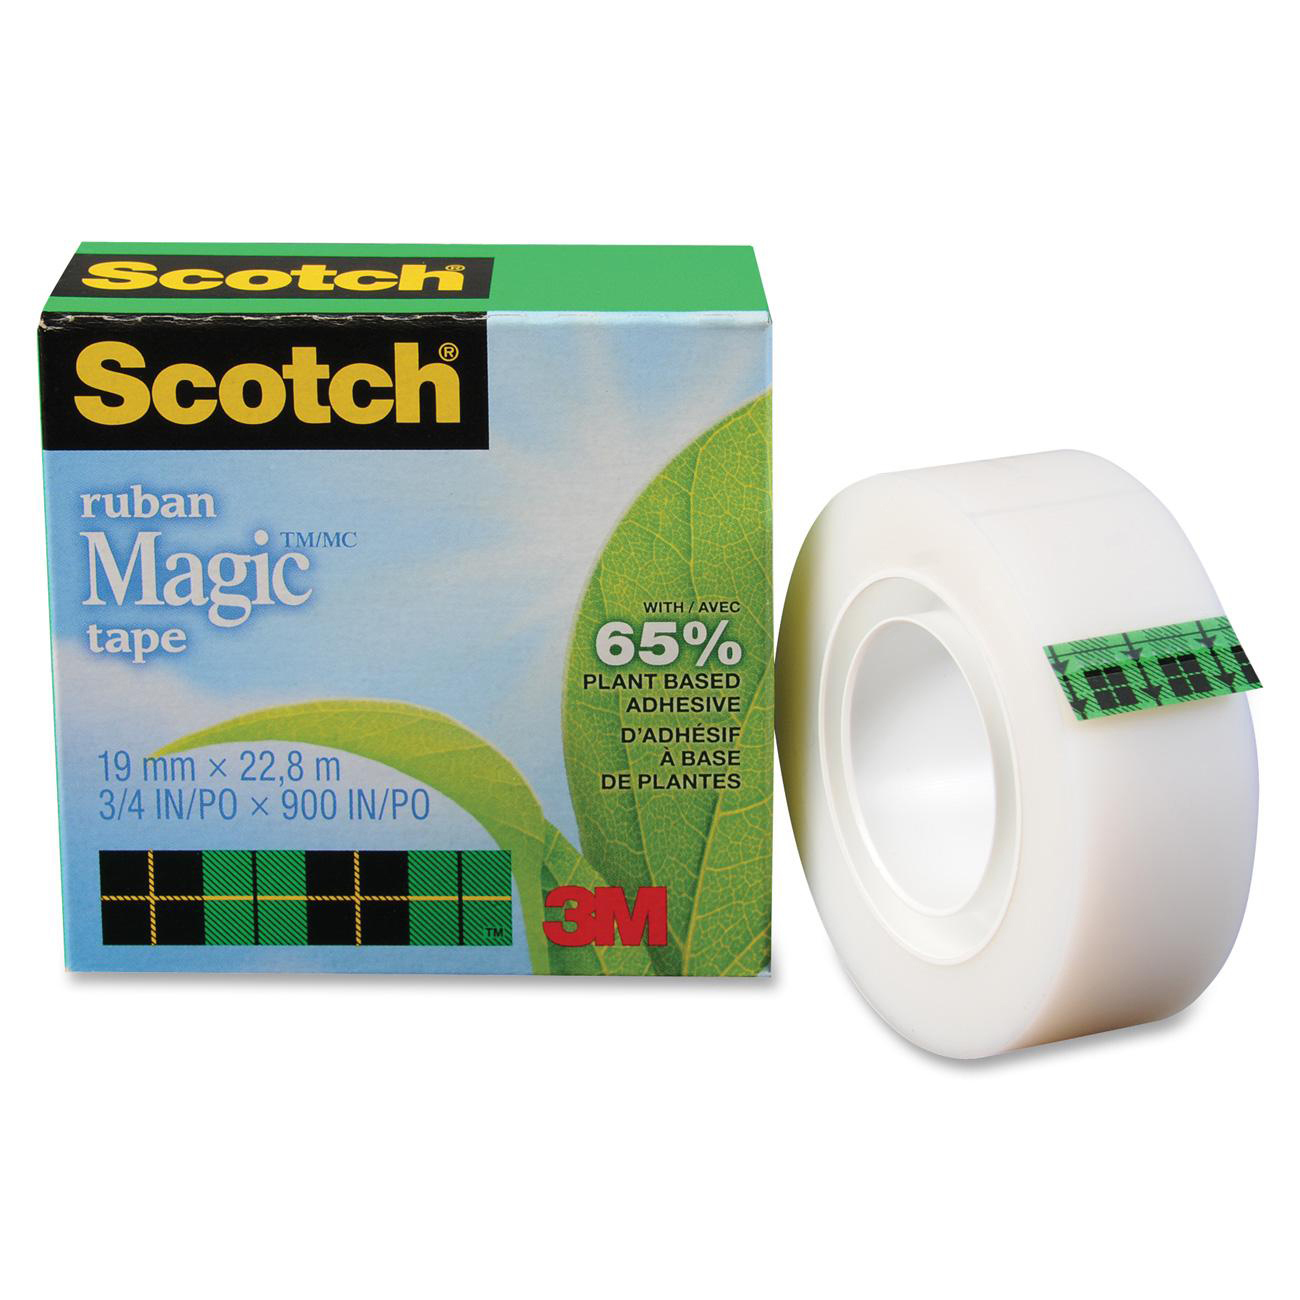 3M Scotch Magic Transparent Tape - Madill - The Office Company